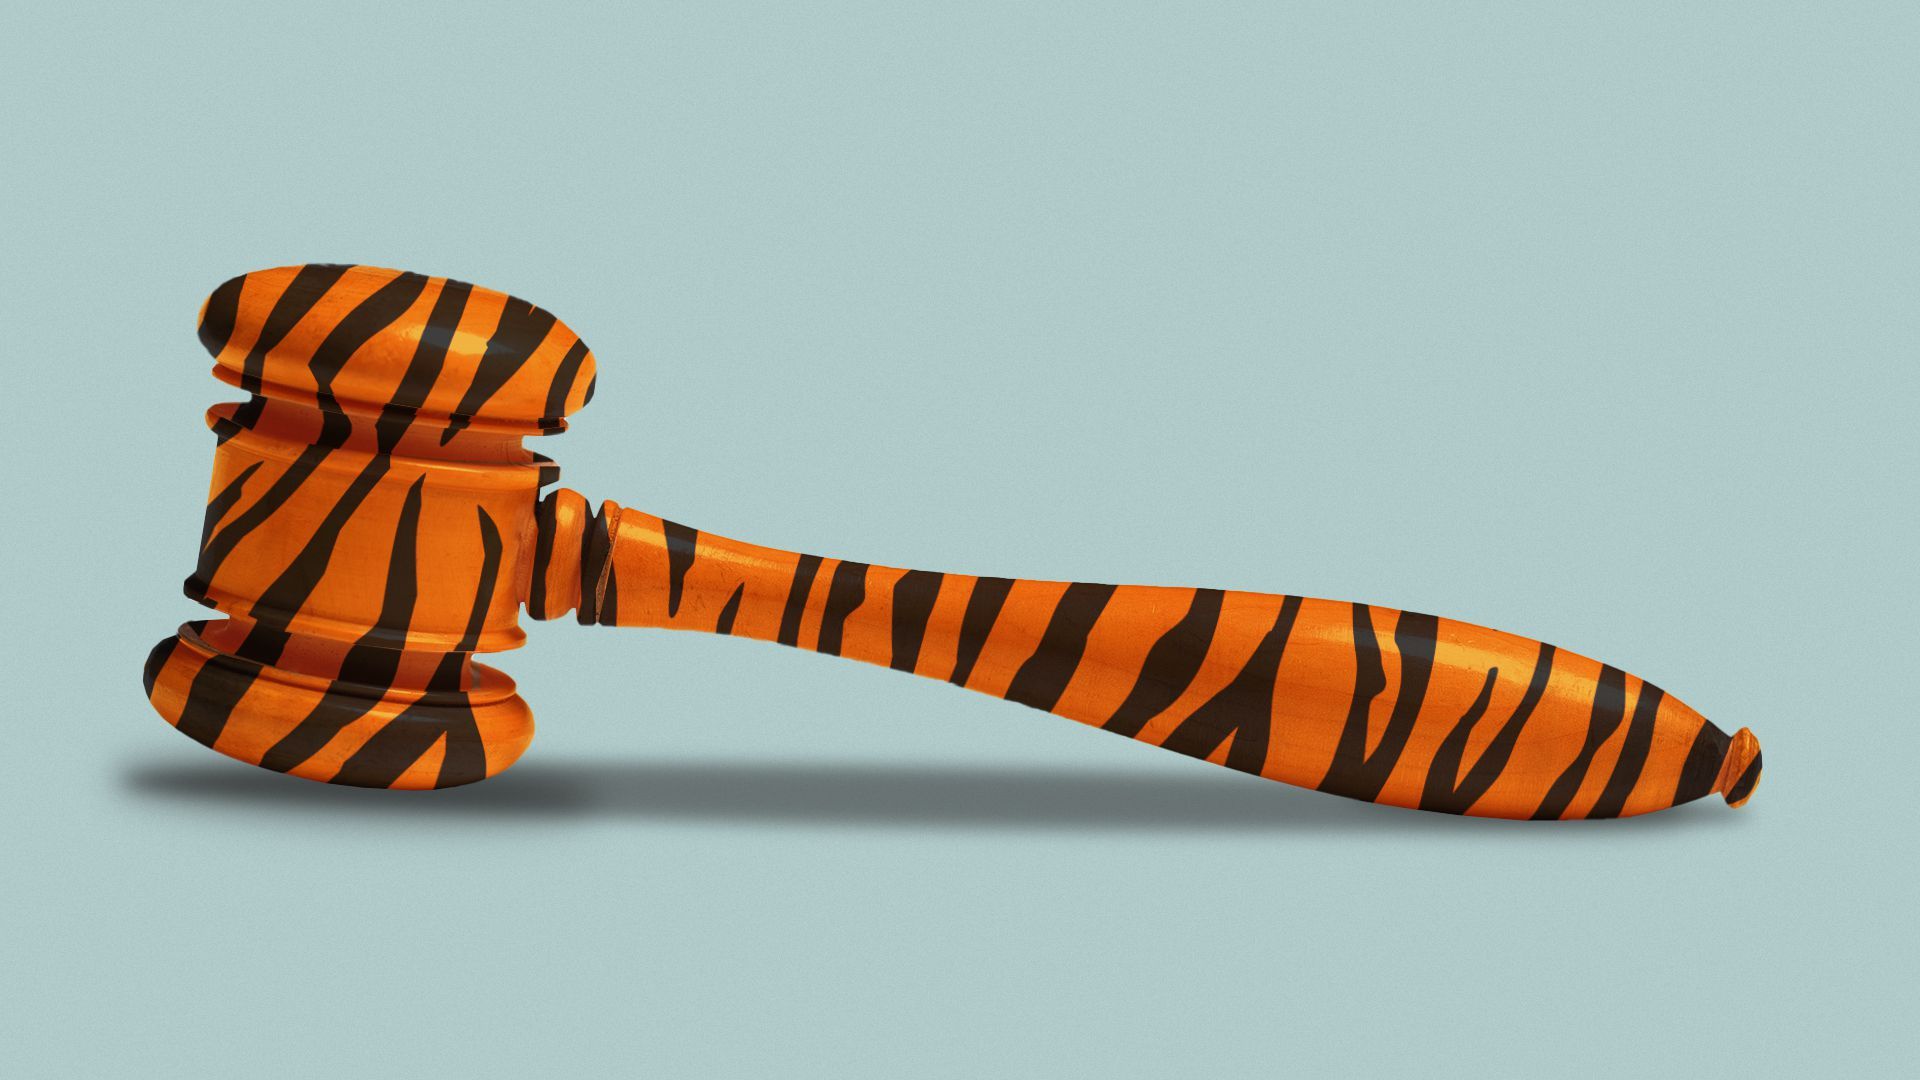 Illustration of a tiger-striped gavel